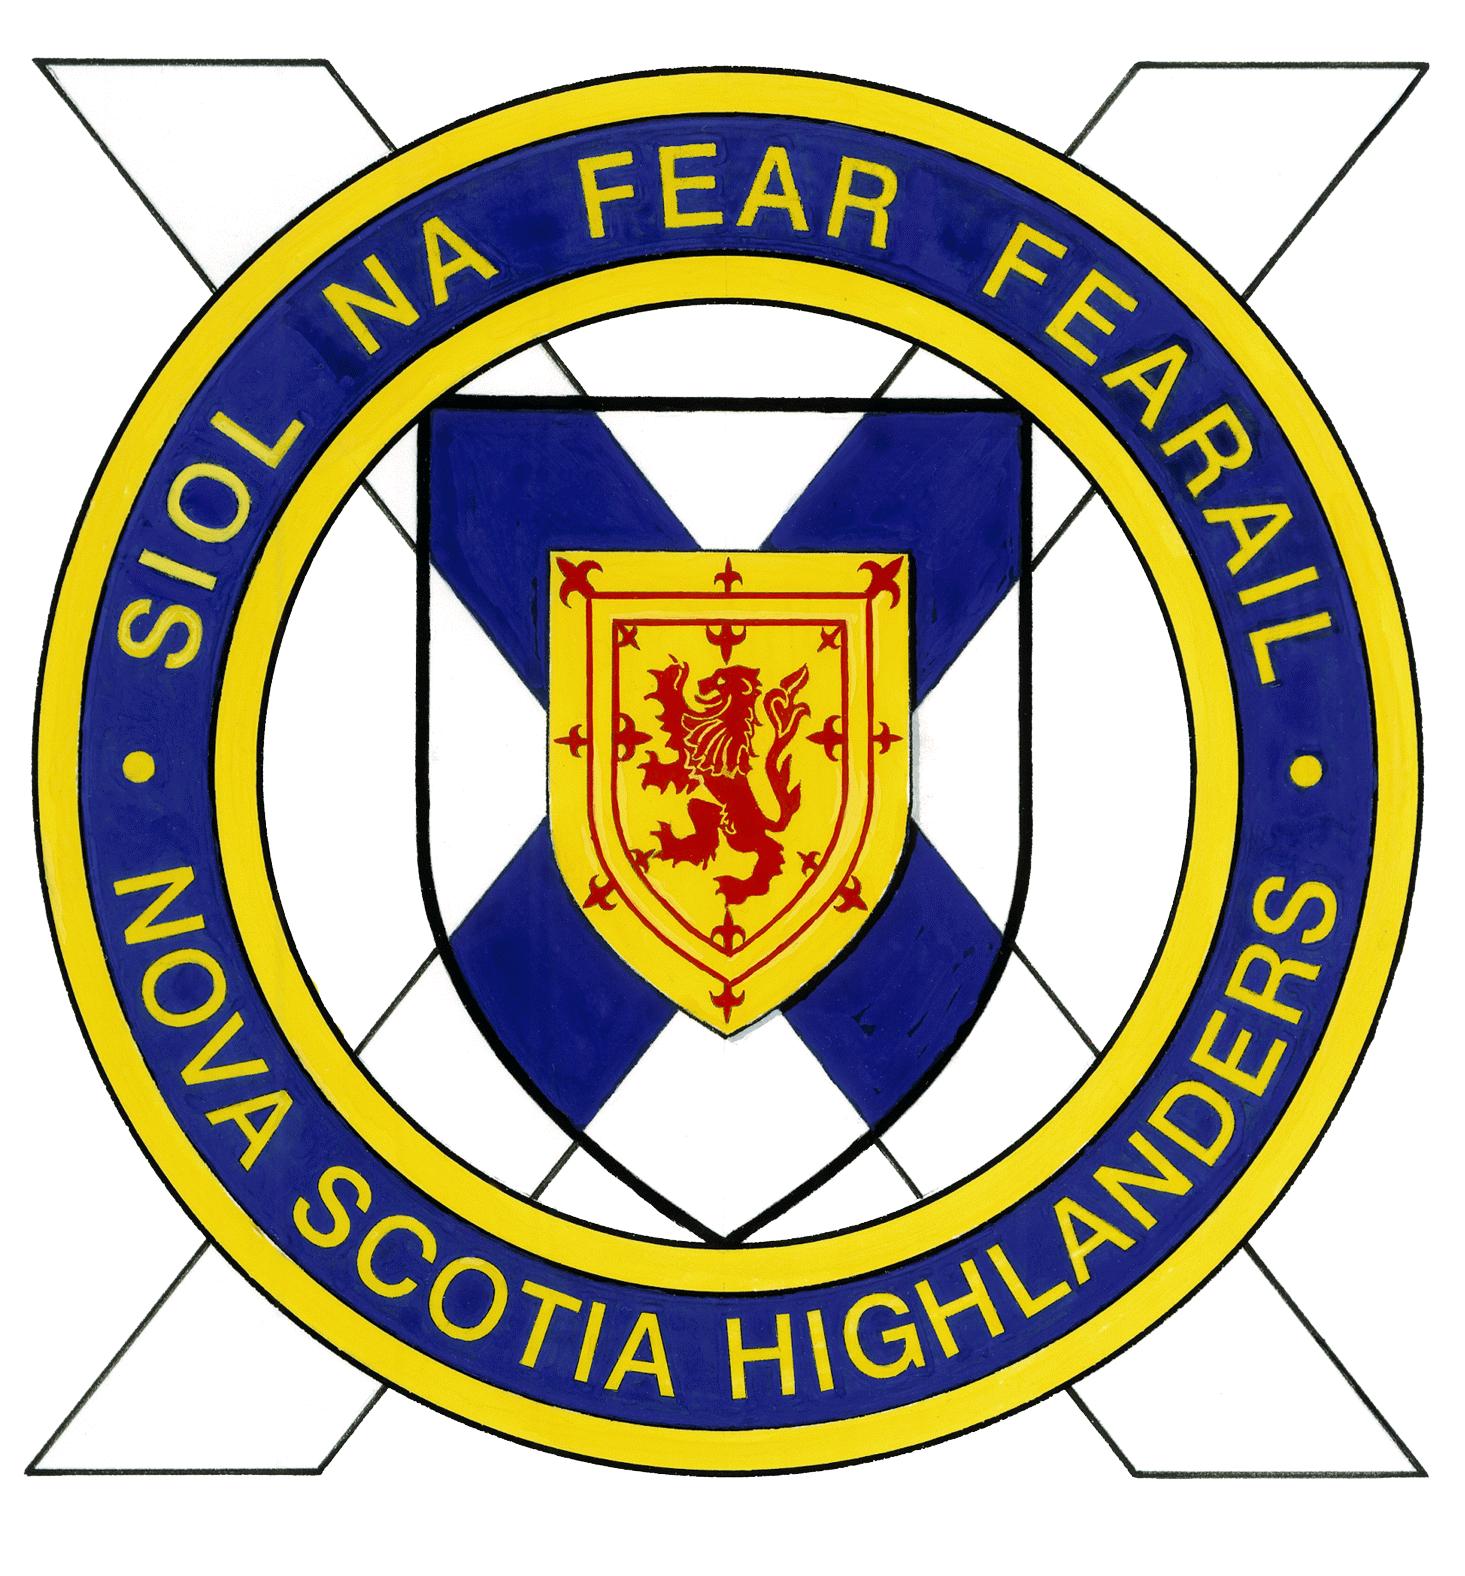 THE NOVA SCOTIA HIGHLANDERS BADGE Description A saltire Argent surmounted by the shield of Arms of the Province of Nova Scotia (Argent on a saltire Azure an escutcheon of the Royal Arms of Scotland)